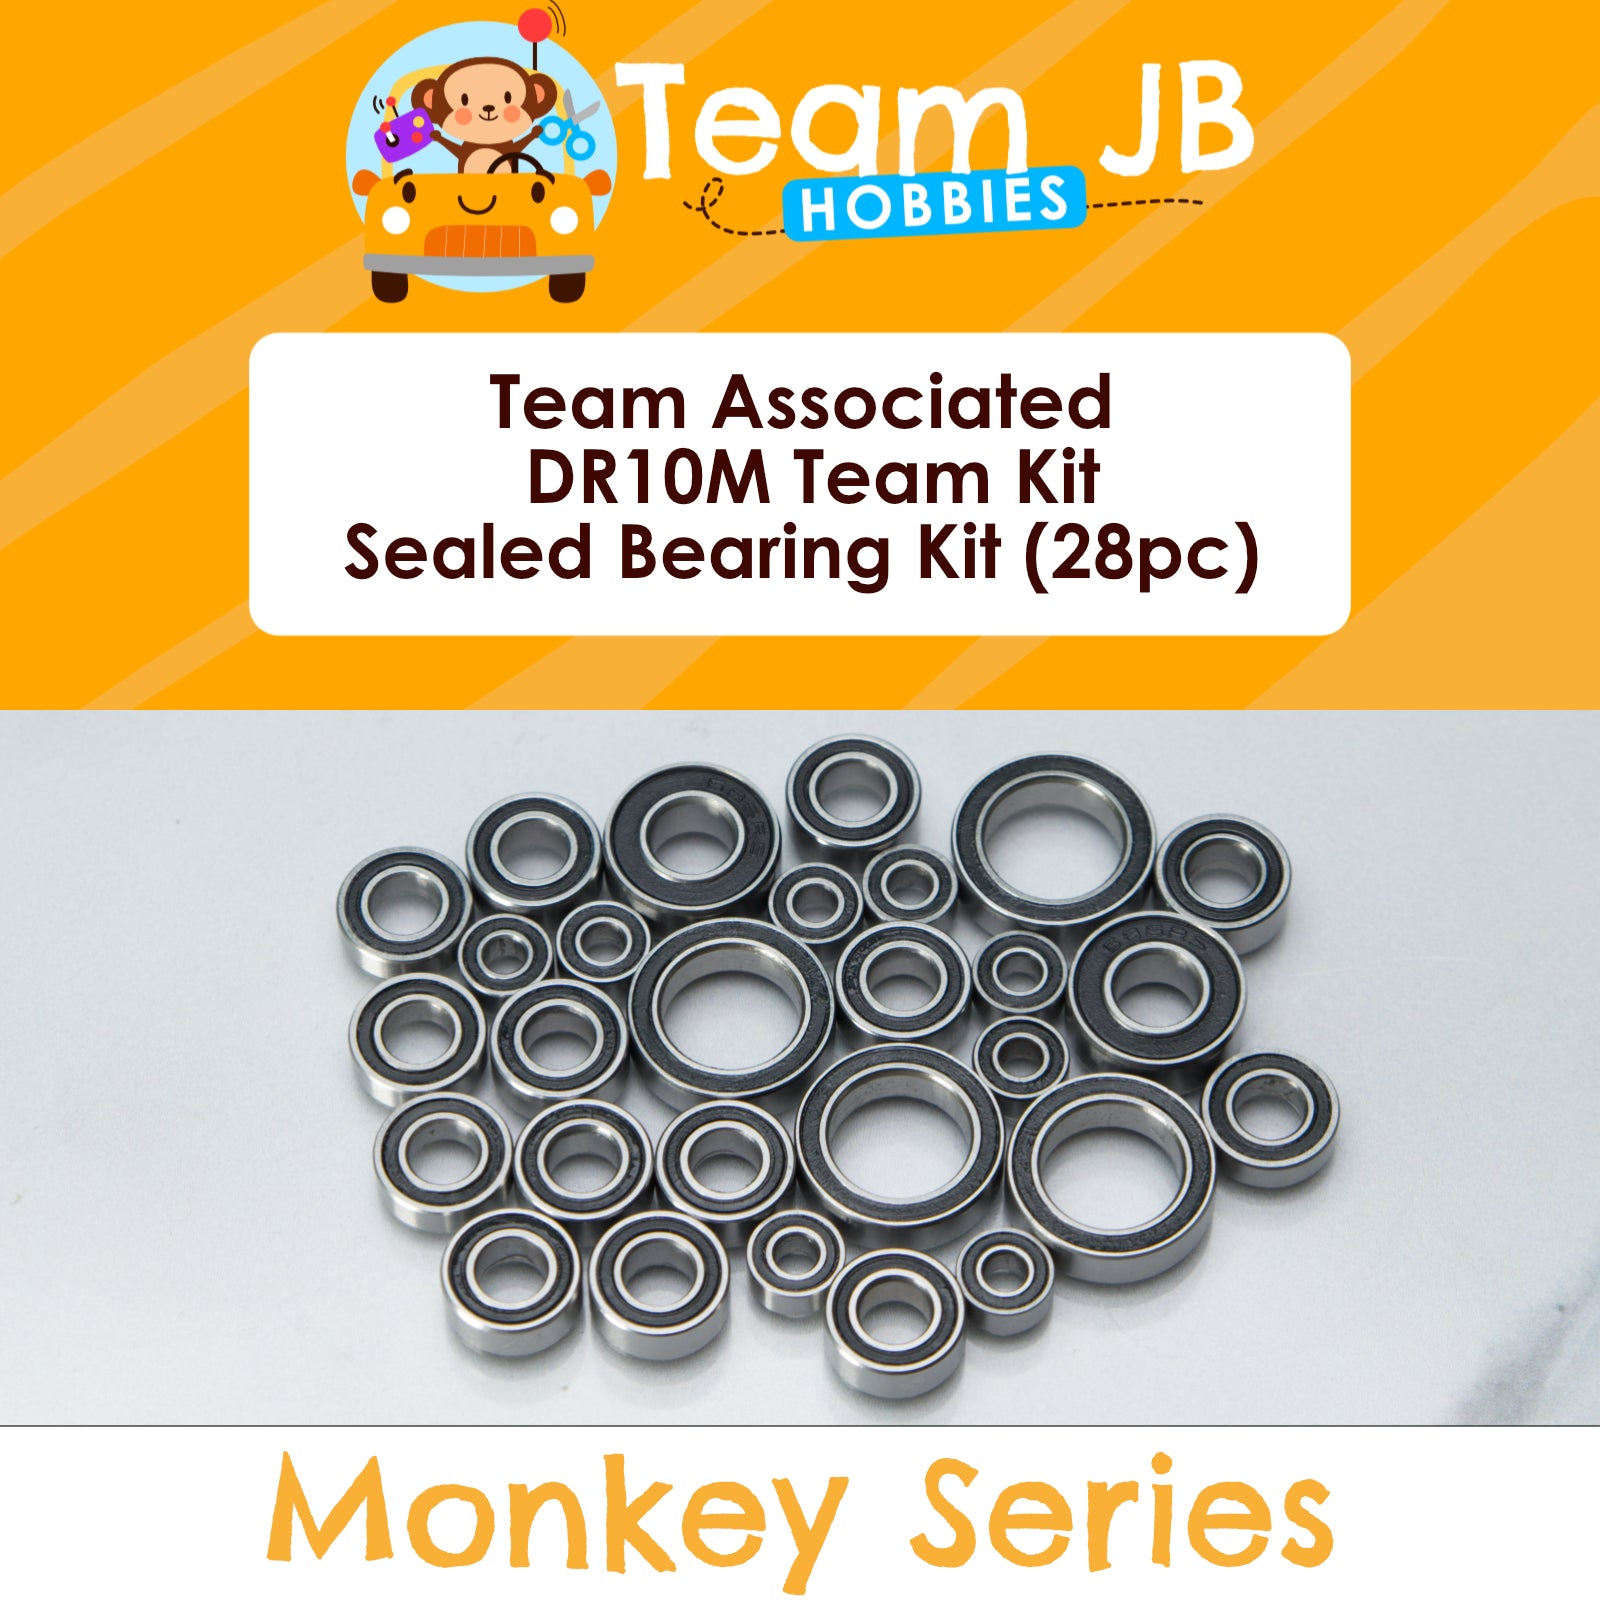 Team Associated DR10M Team Kit - Sealed Bearing Kit